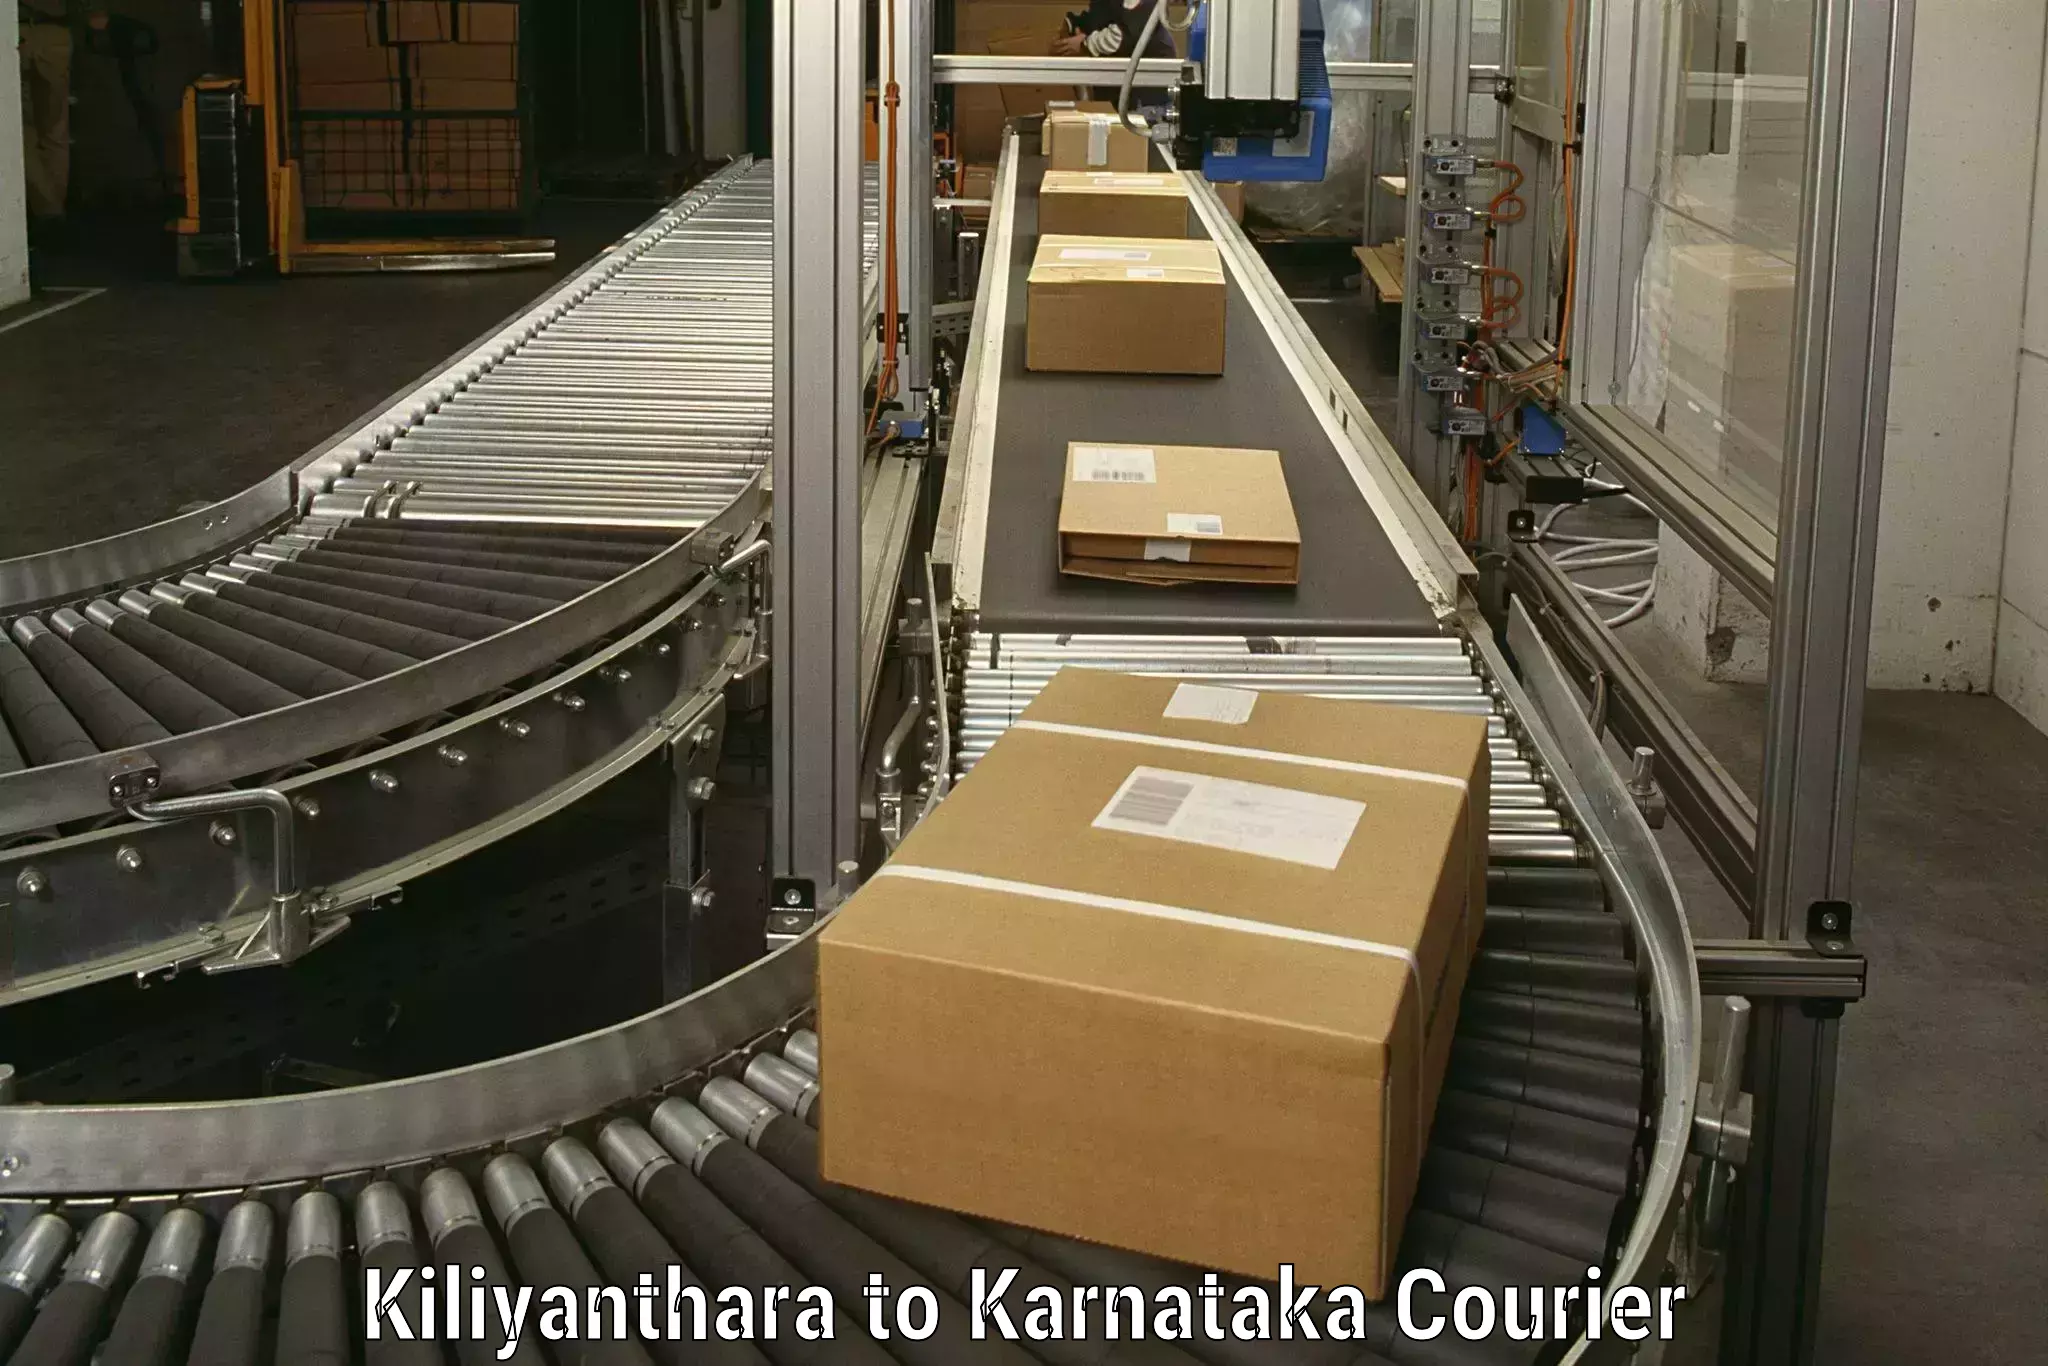 Moving and storage services Kiliyanthara to Kodagu